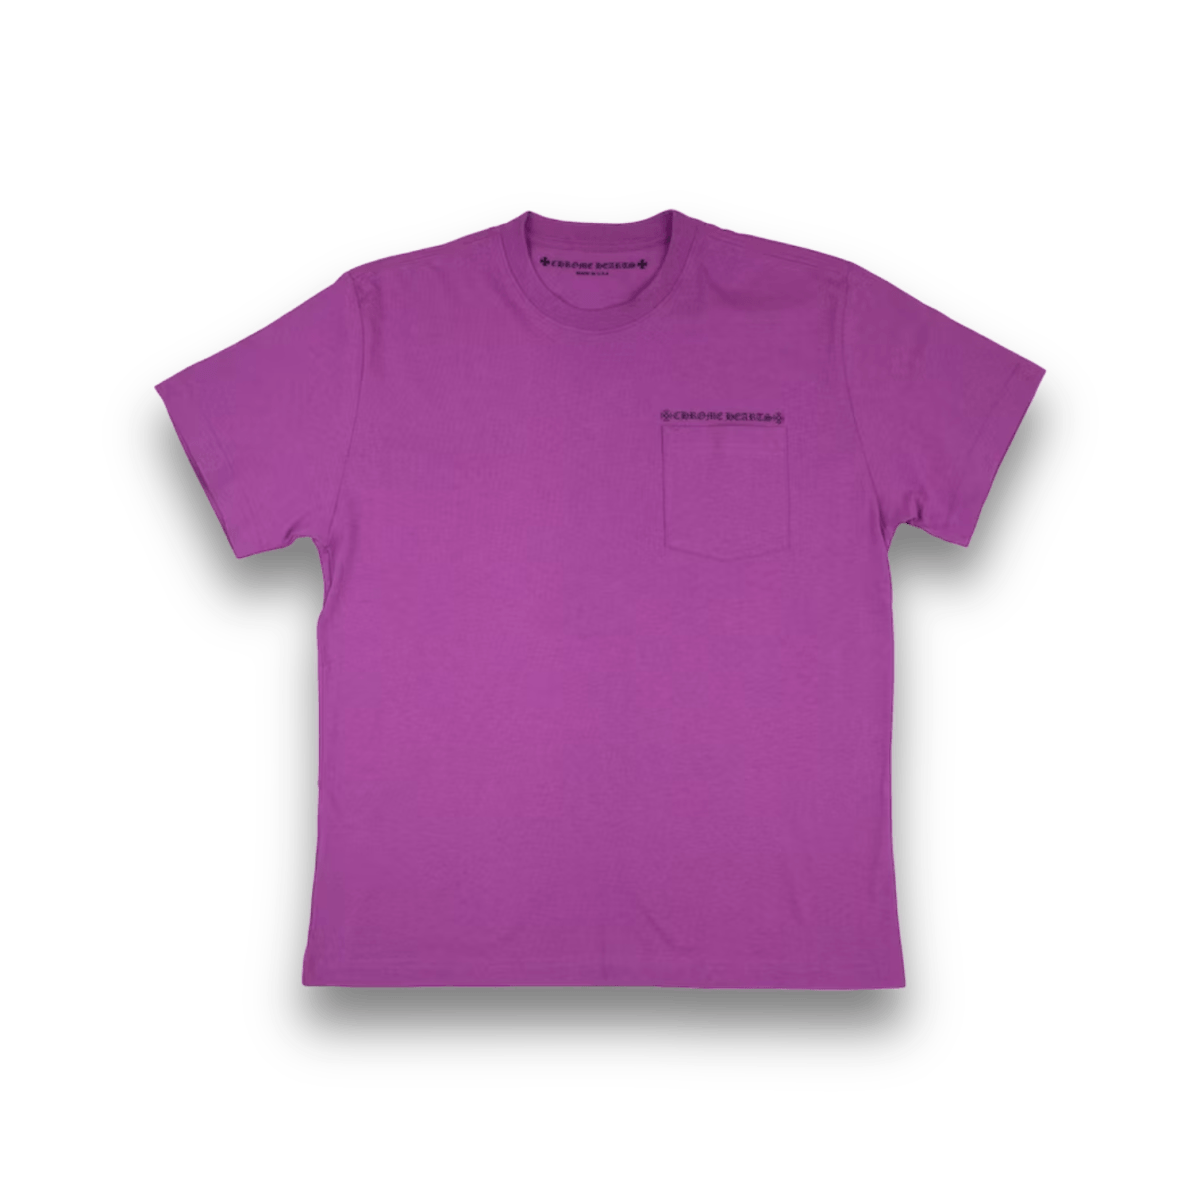 Chrome Hearts Matty Boy Spider Web T-shirt - Short Sleeve - Jawns on Fire Sneakers & Streetwear